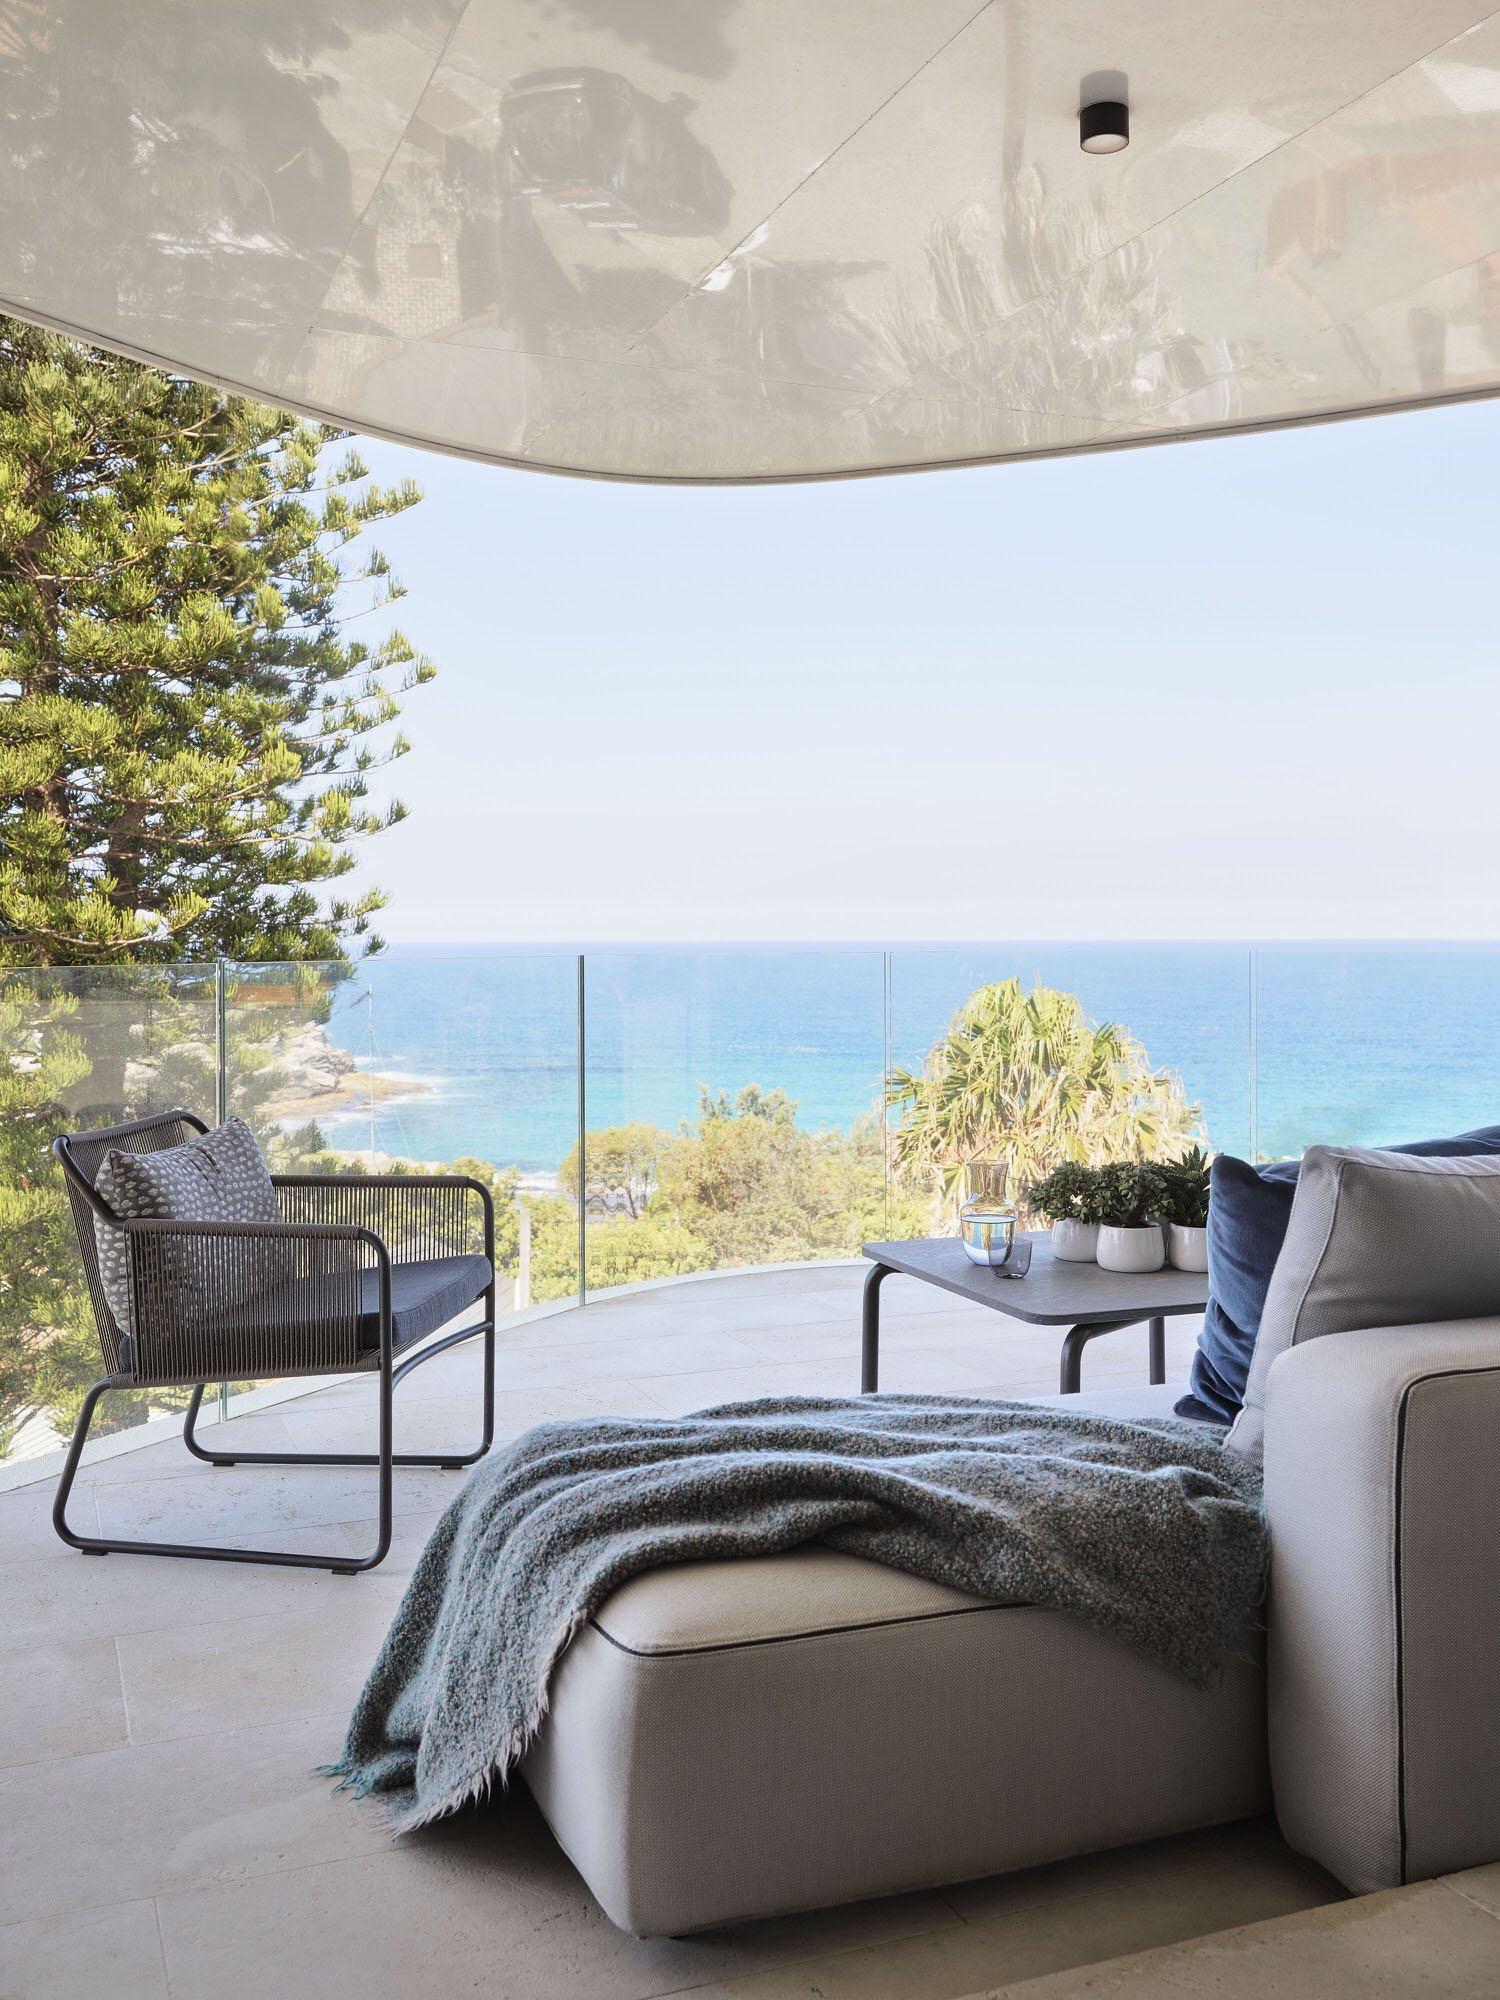 Casa moderna en Australia con fachada blanca salon con vistas al mar